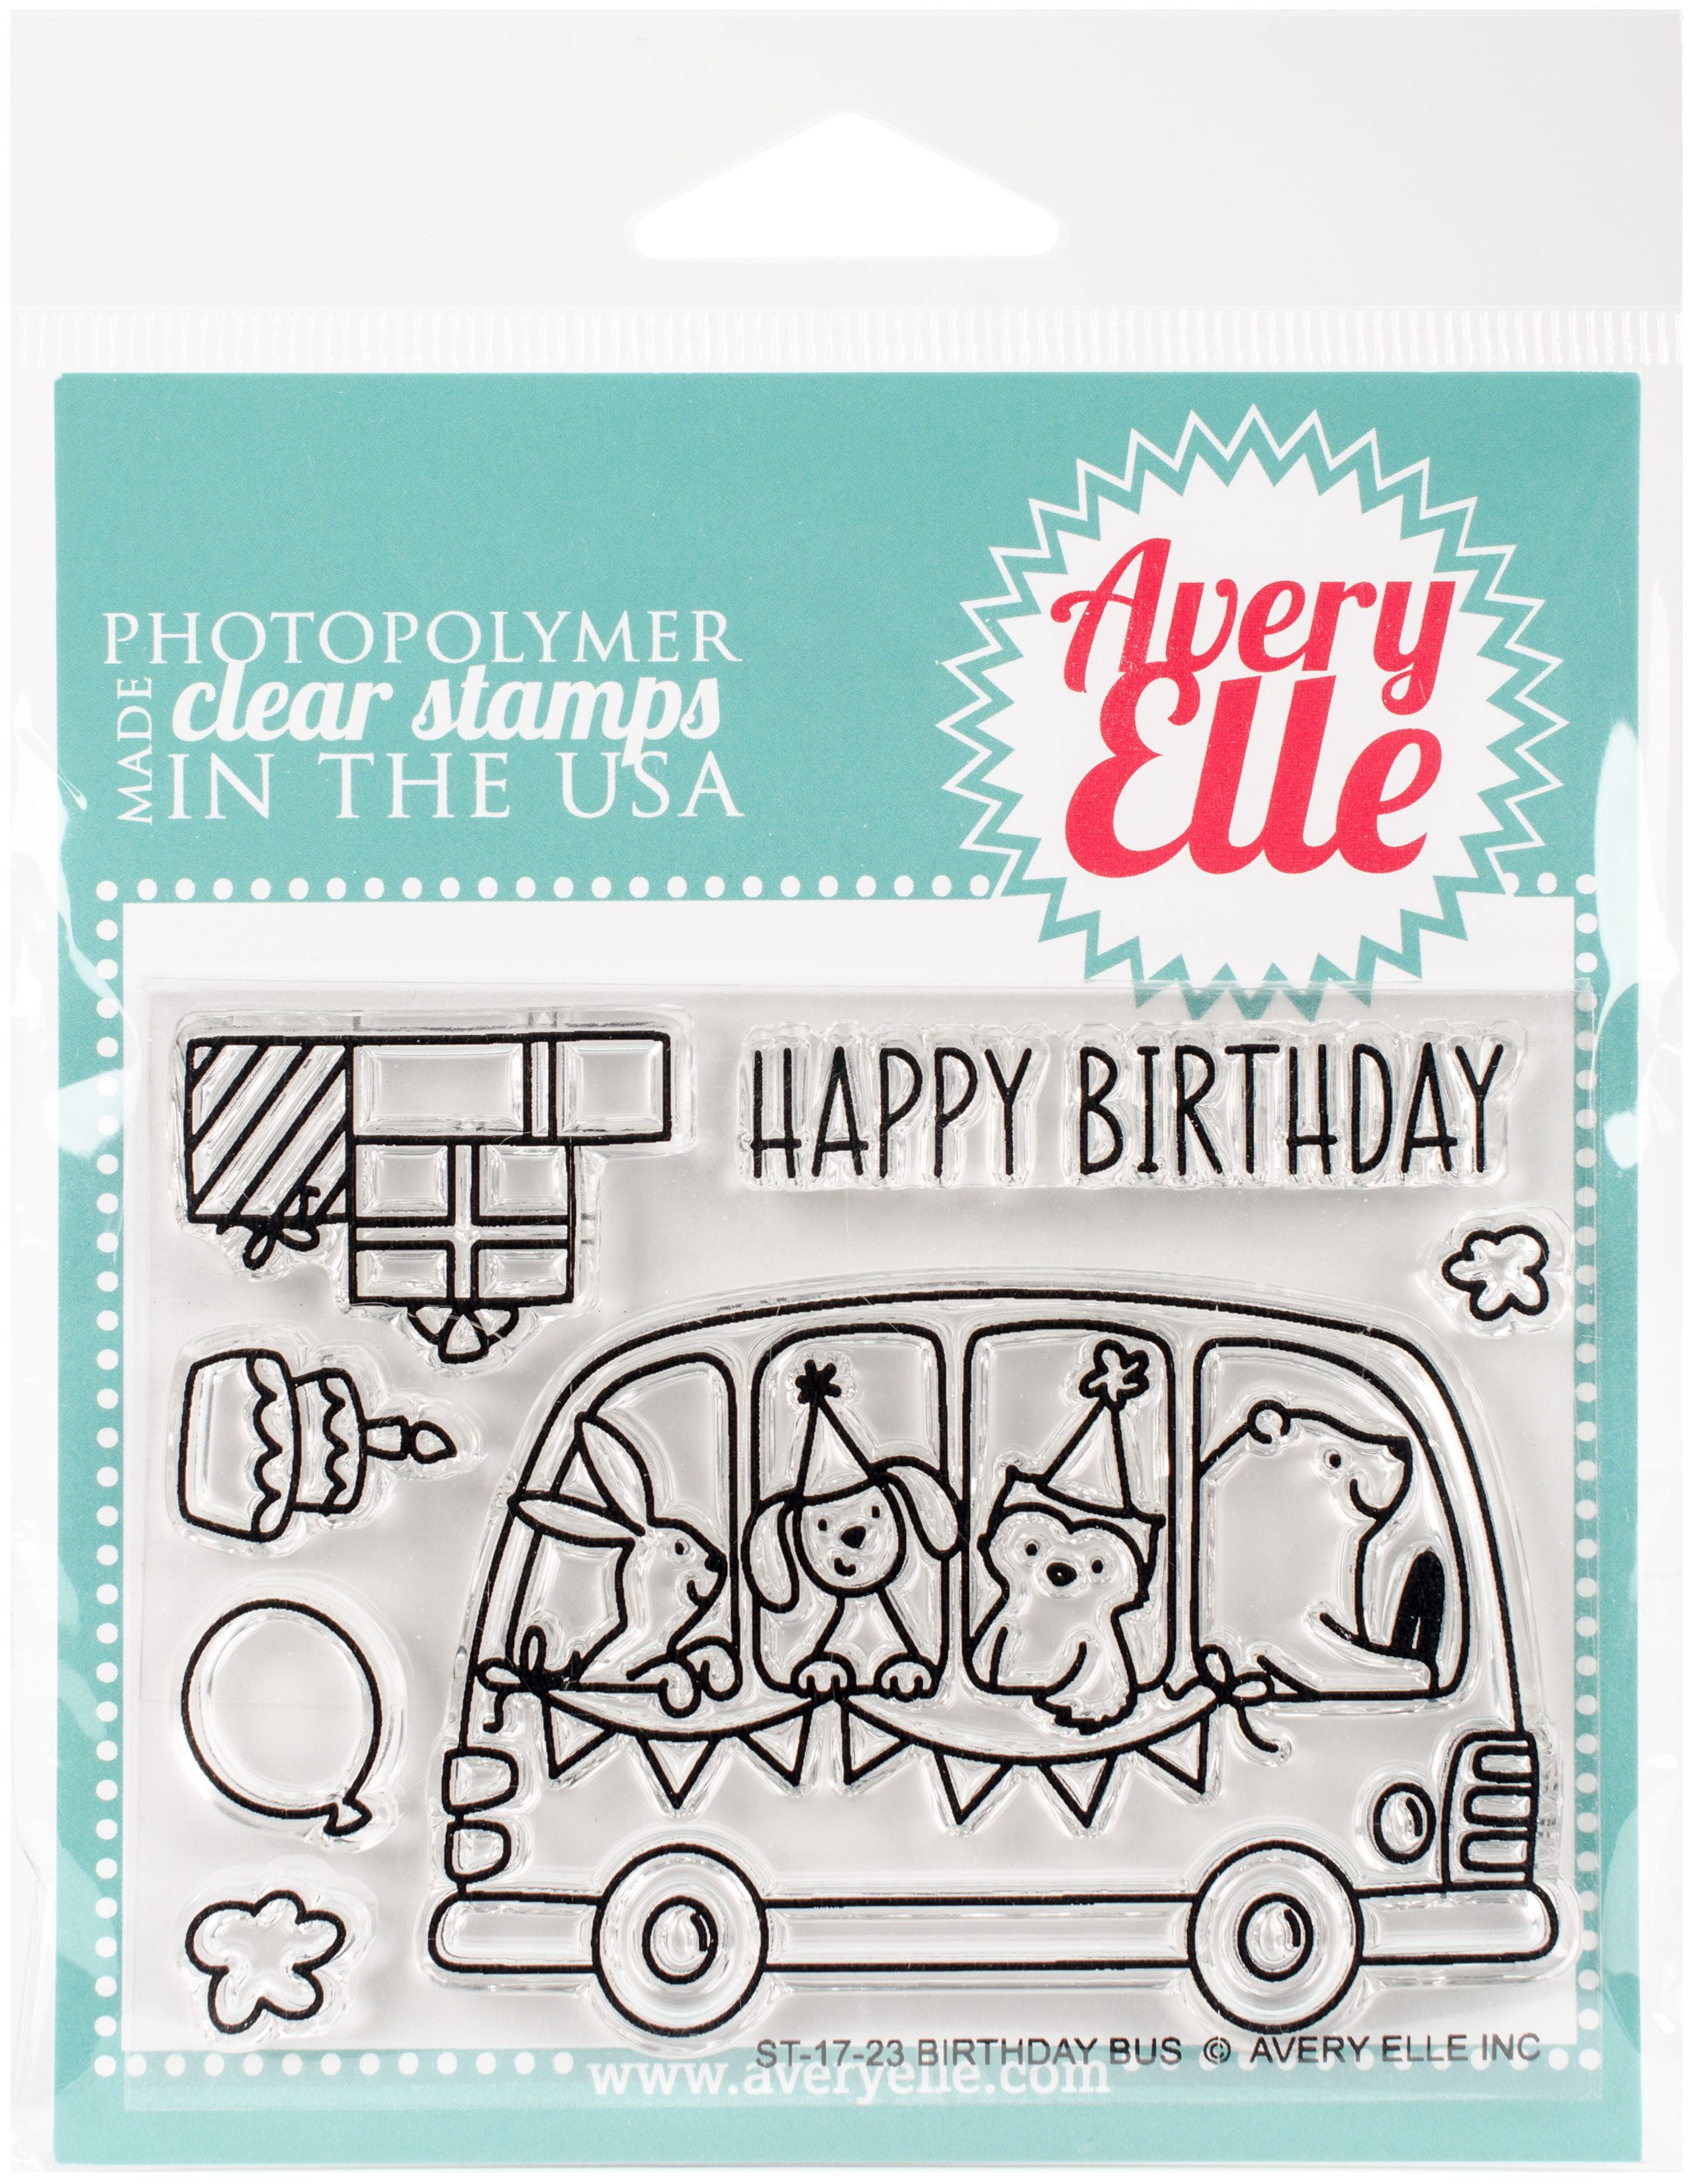 Stampin Up & Avery Elle "HAPPY BIRTHDAY" Birthday Bus Party Animal Handmade Card 